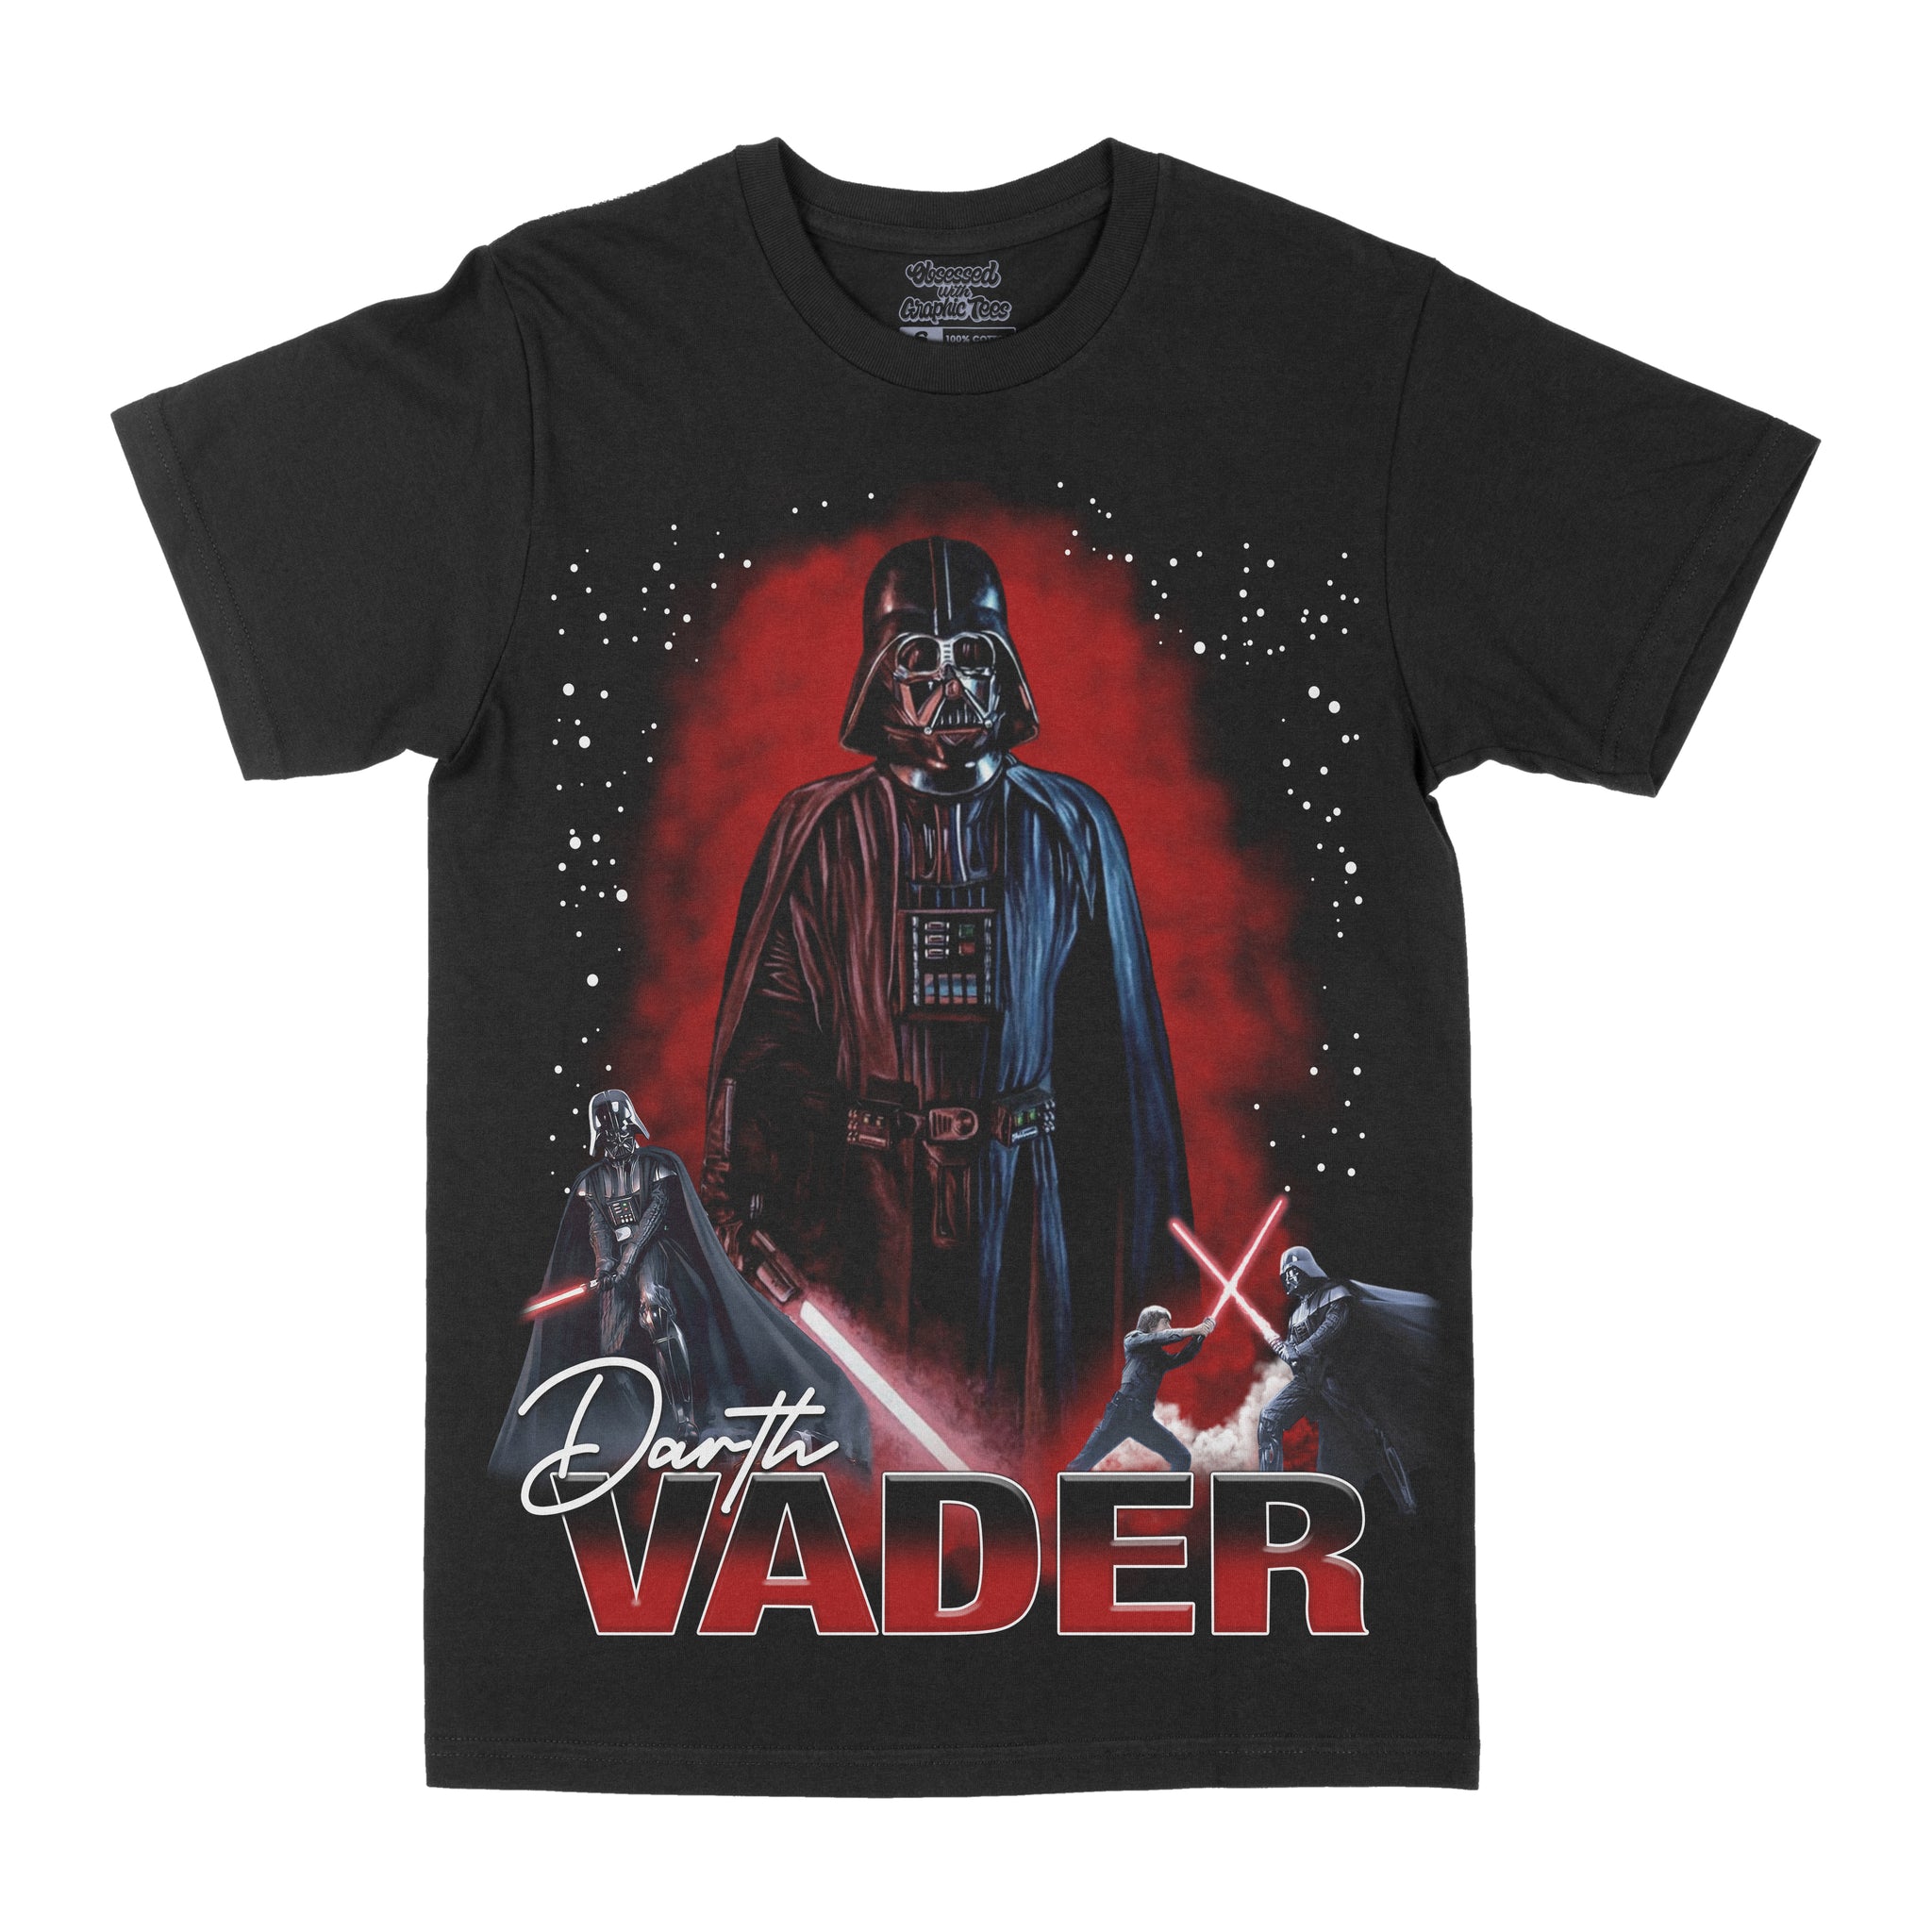 Star Wars "Darth Vader" Graphic Tee